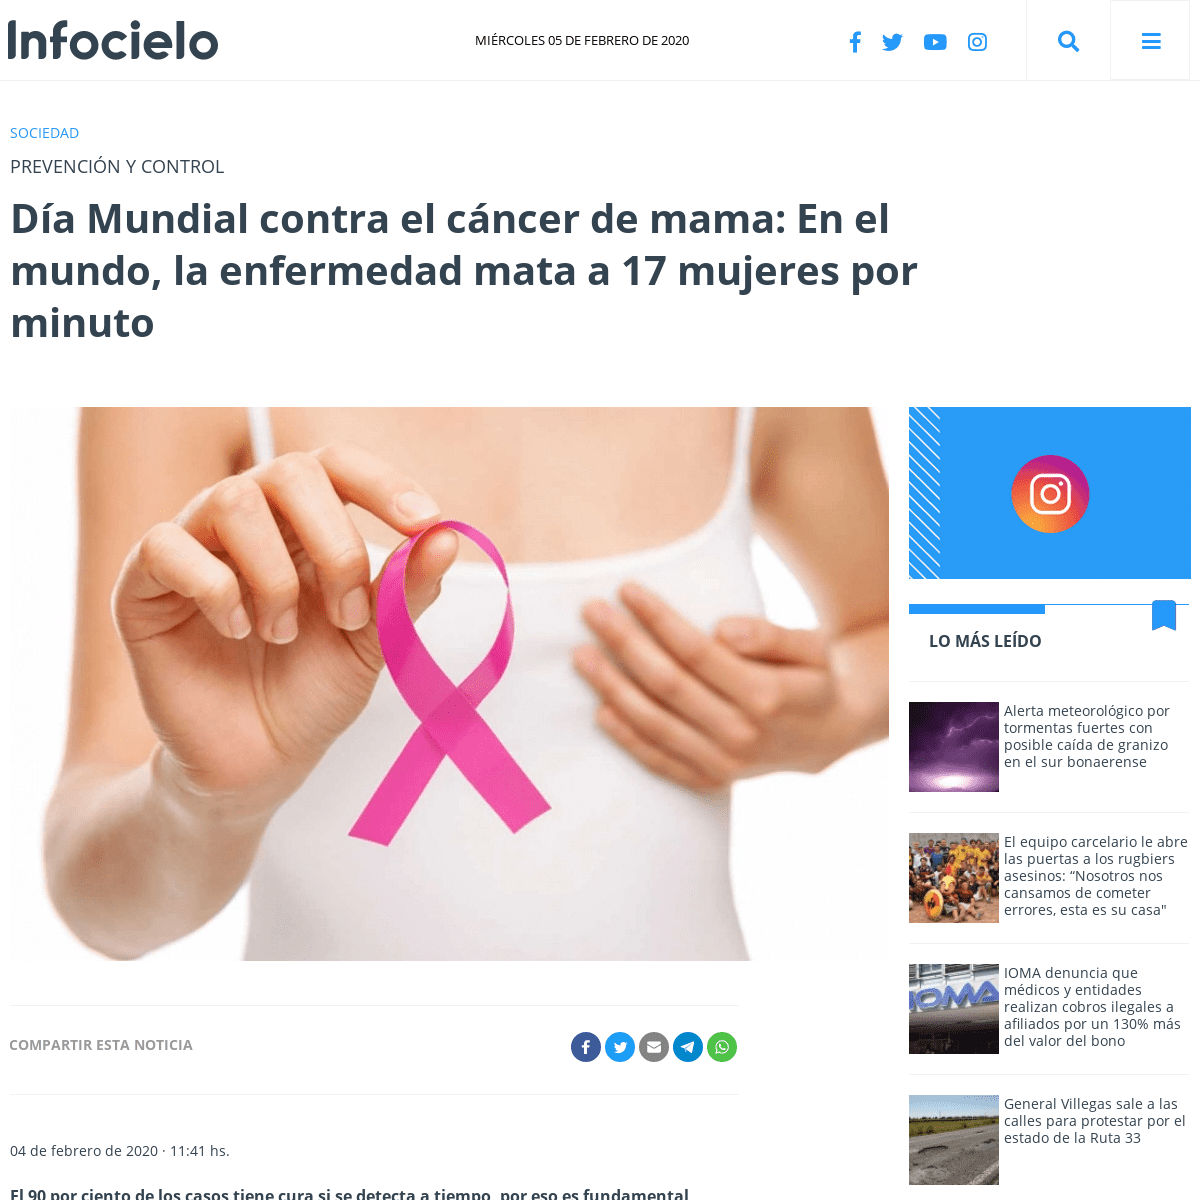 A complete backup of infocielo.com/nota/114718/dia-mundial-contra-el-cancer-de-mama-en-el-mundo-la-enfermedad-mata-a-17-mujeres-